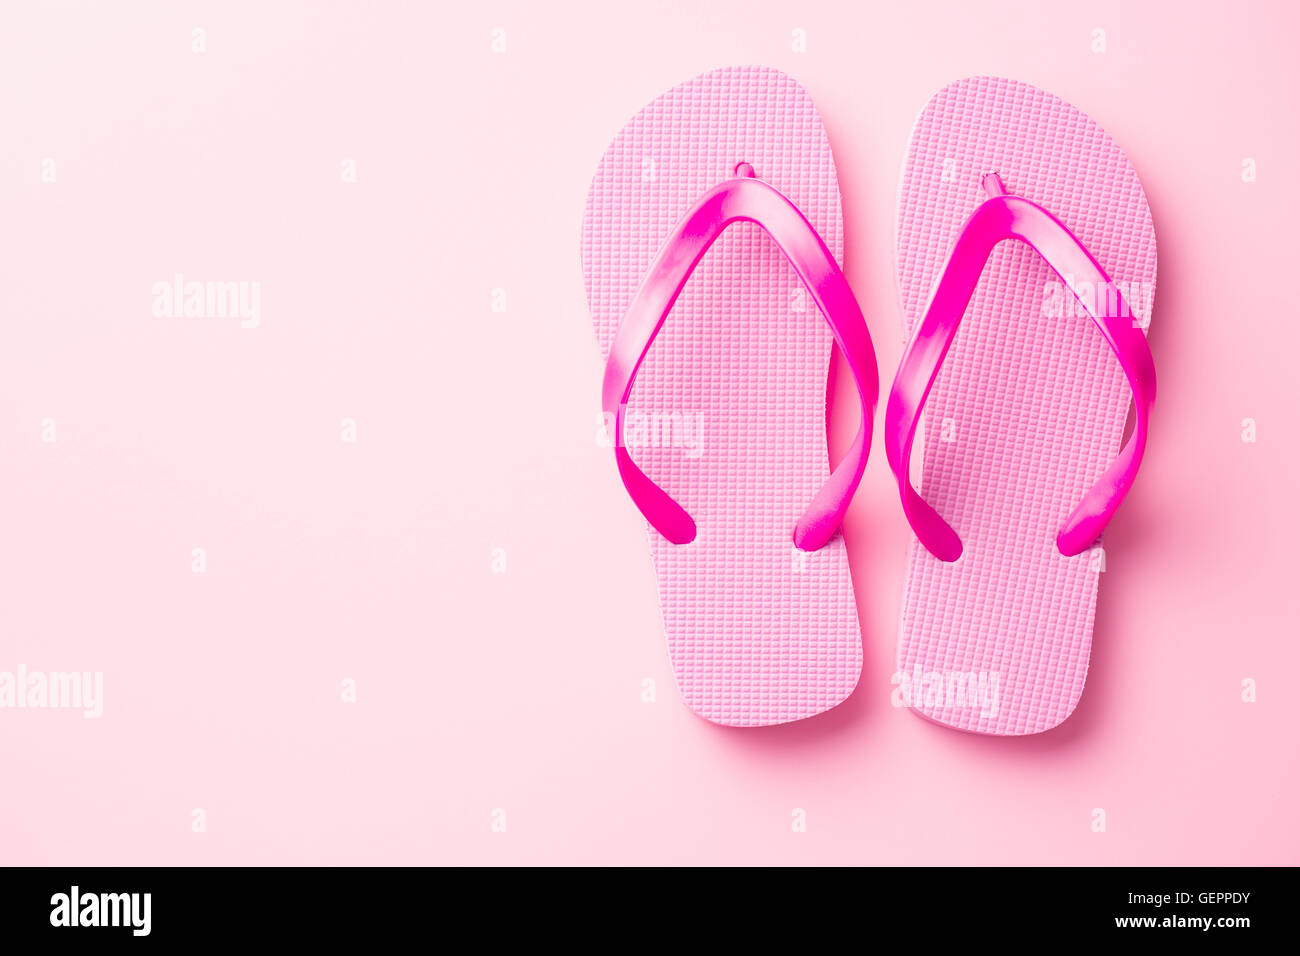 Pink flip flops on pink background. Stock Photo